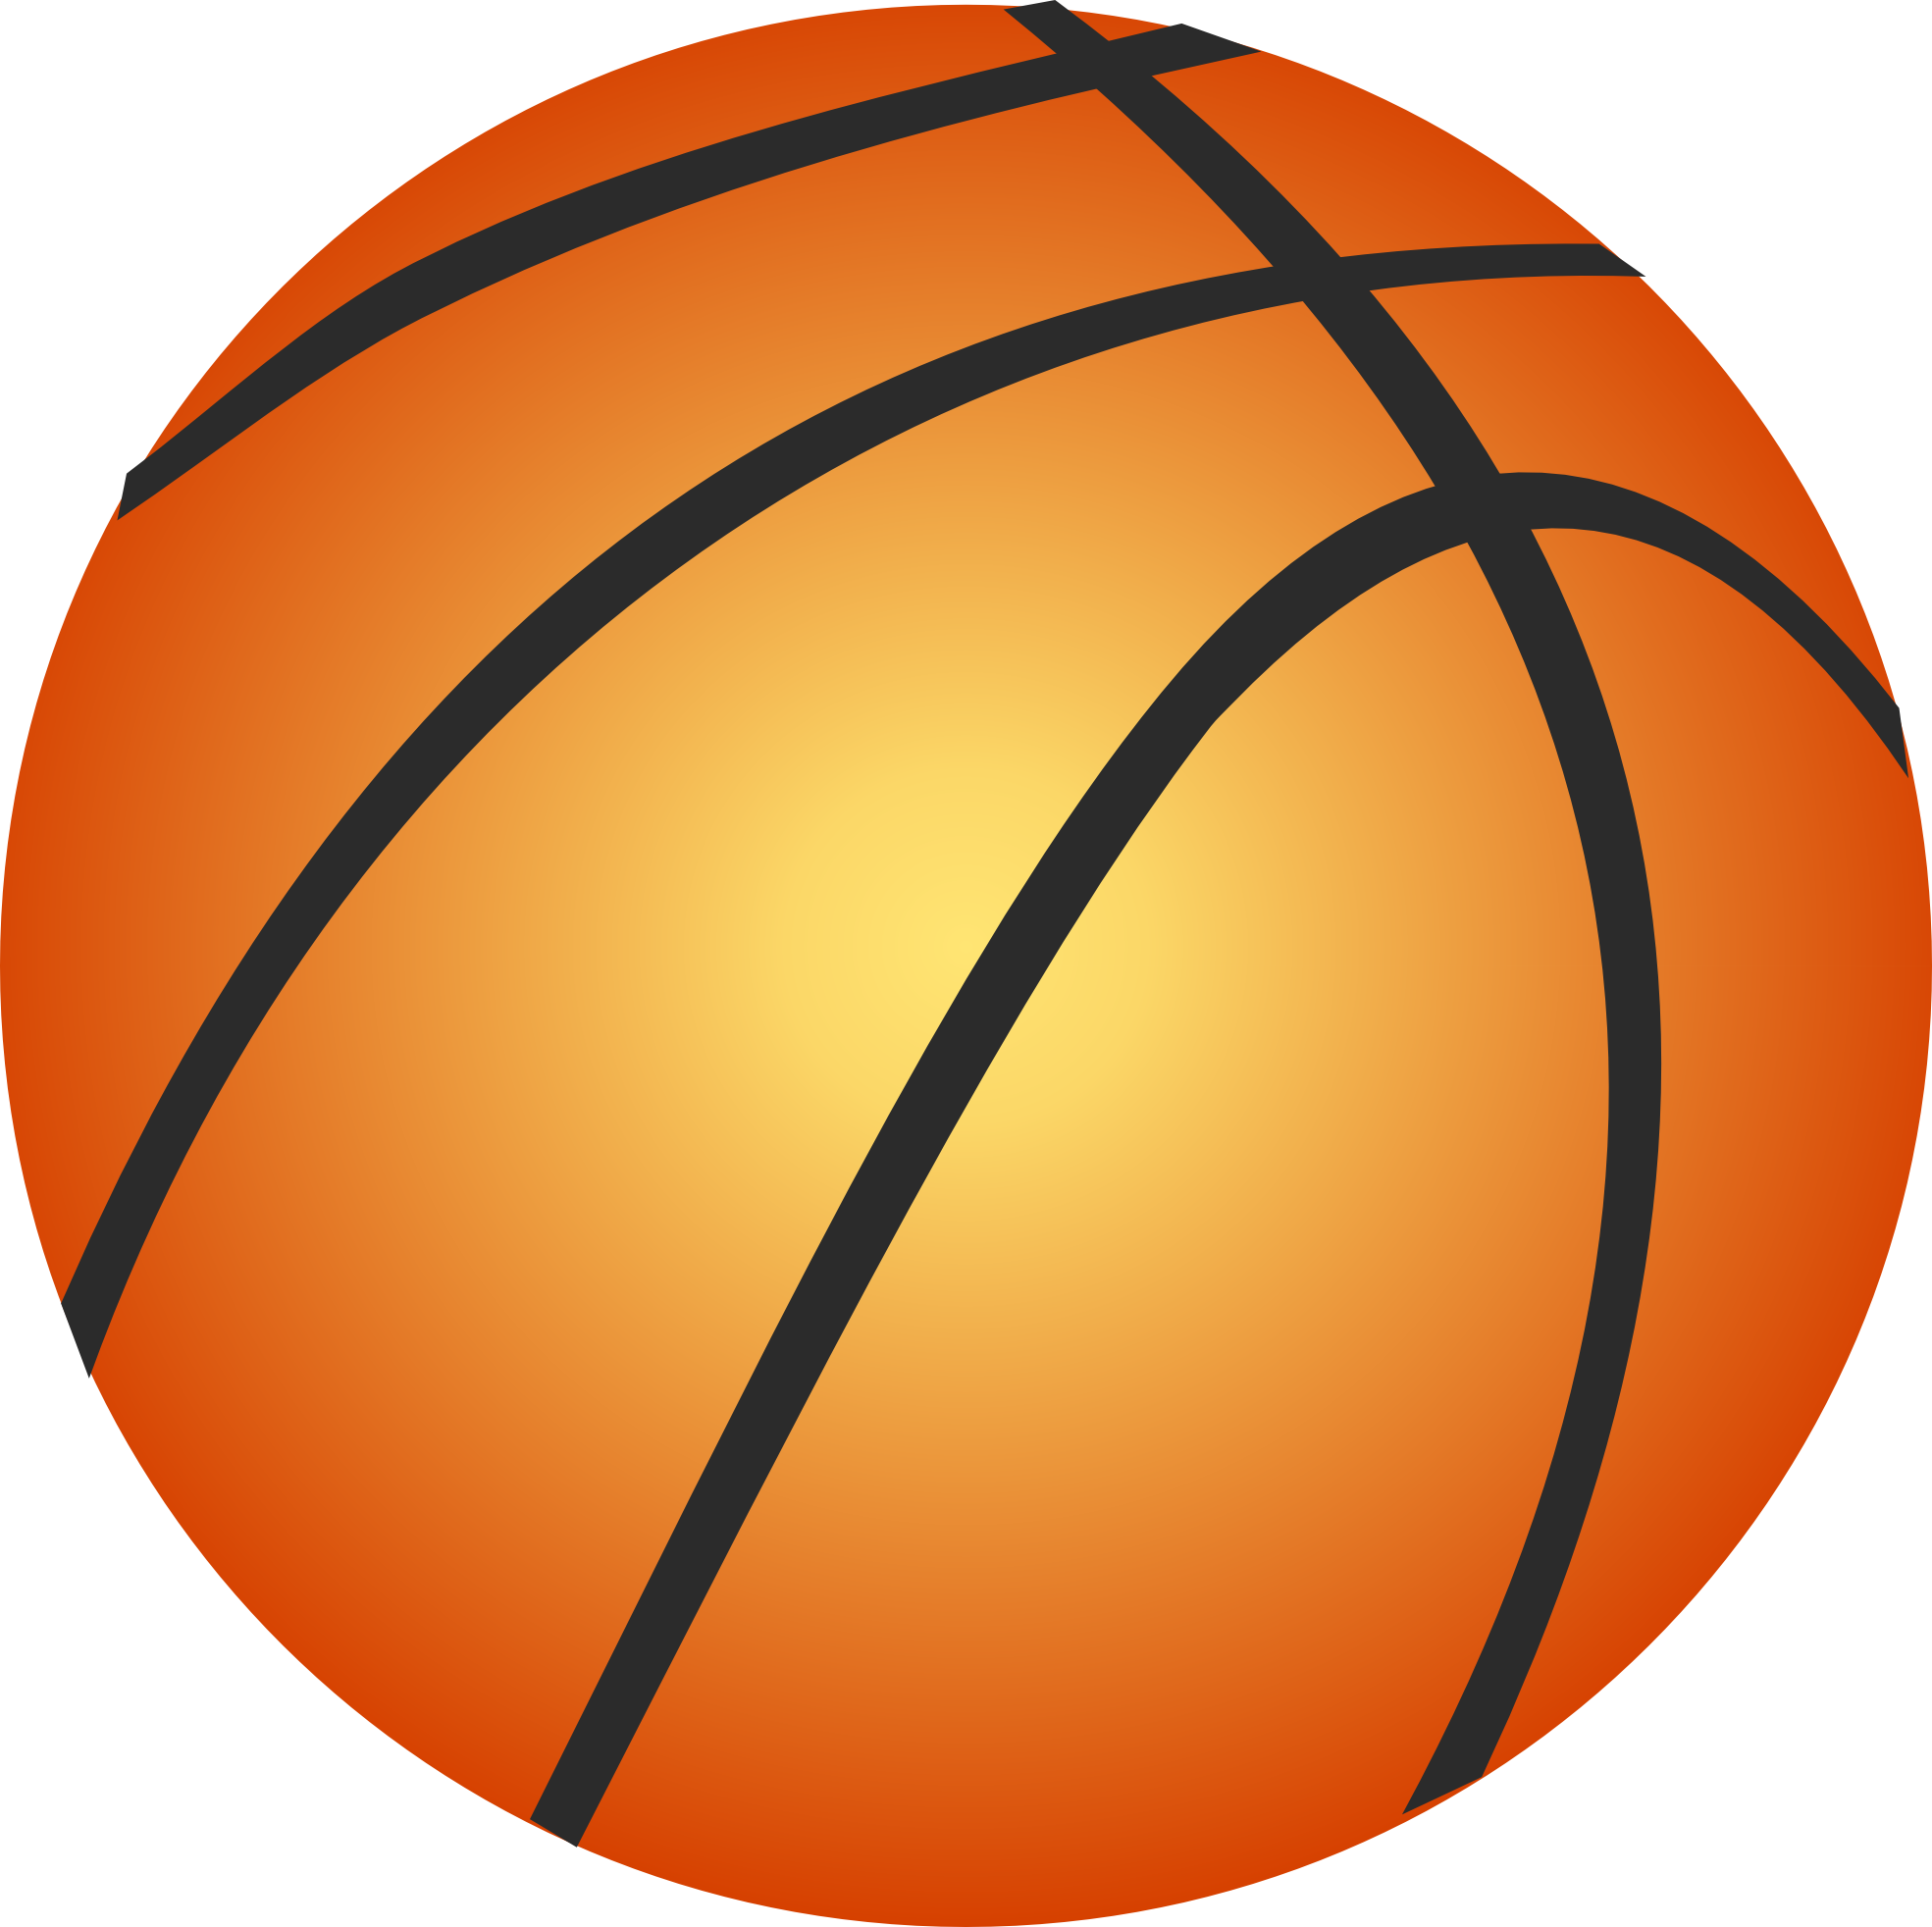 Gioppino basketball clip art 